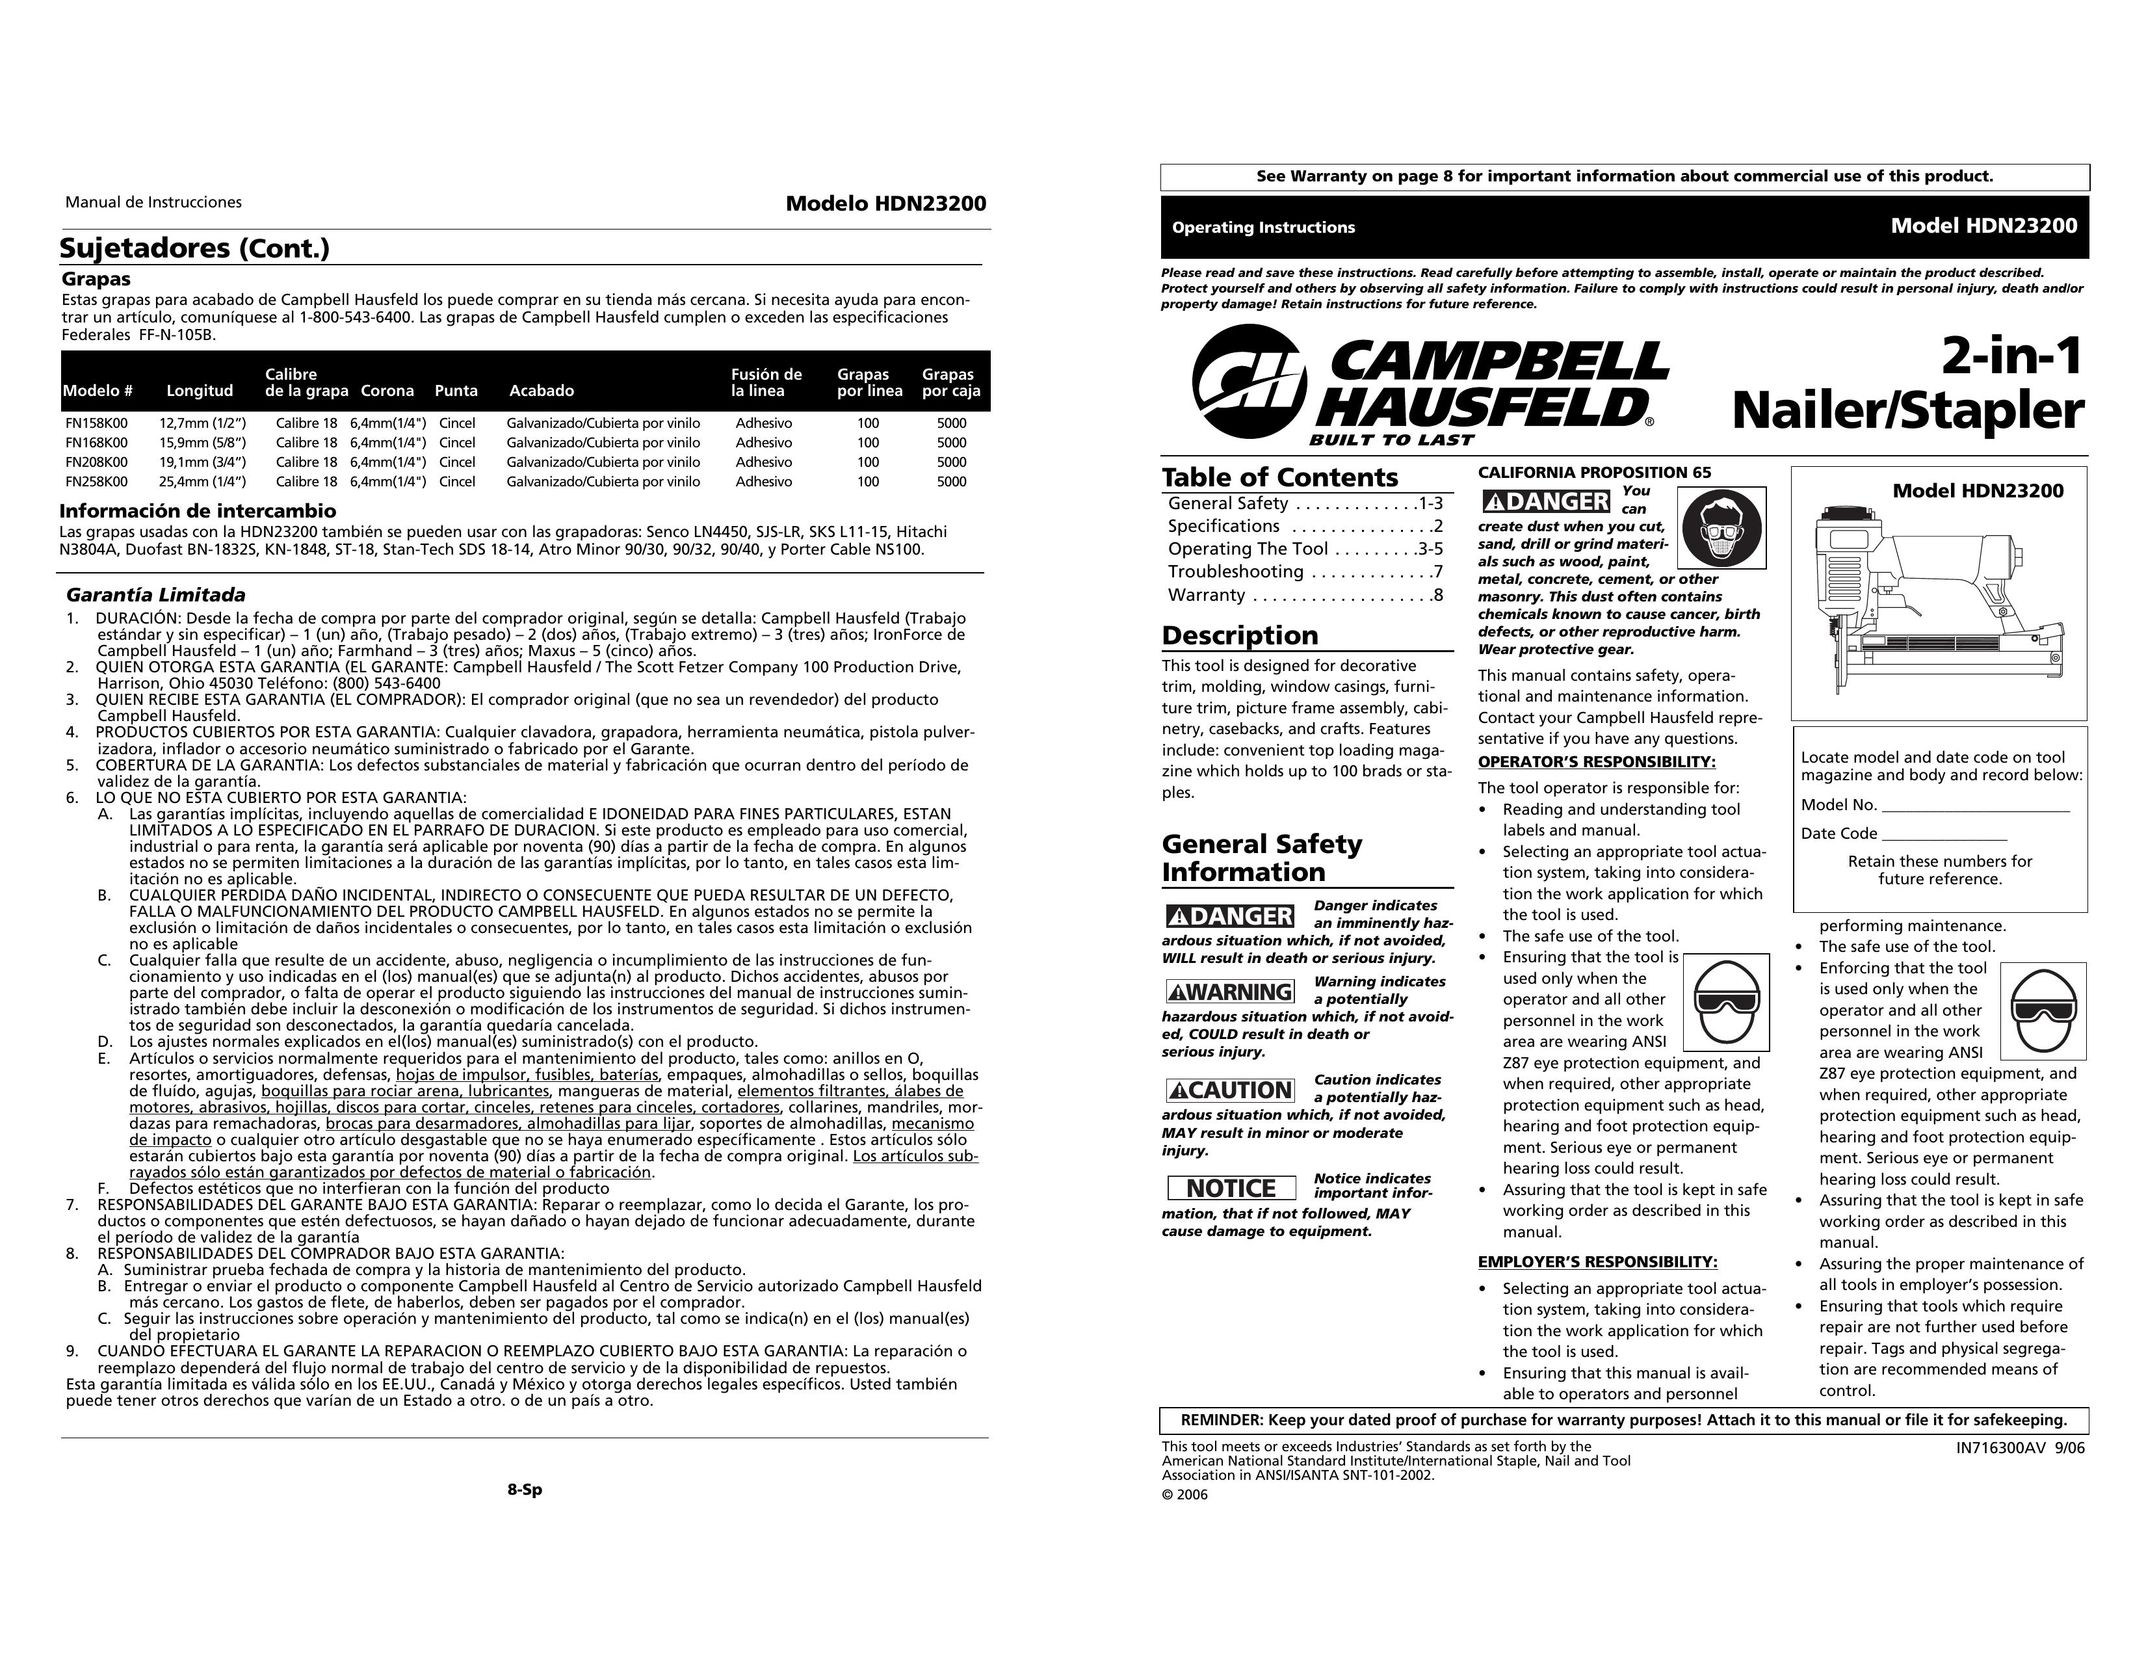 Campbell Hausfeld HDN23200 Staple Gun User Manual